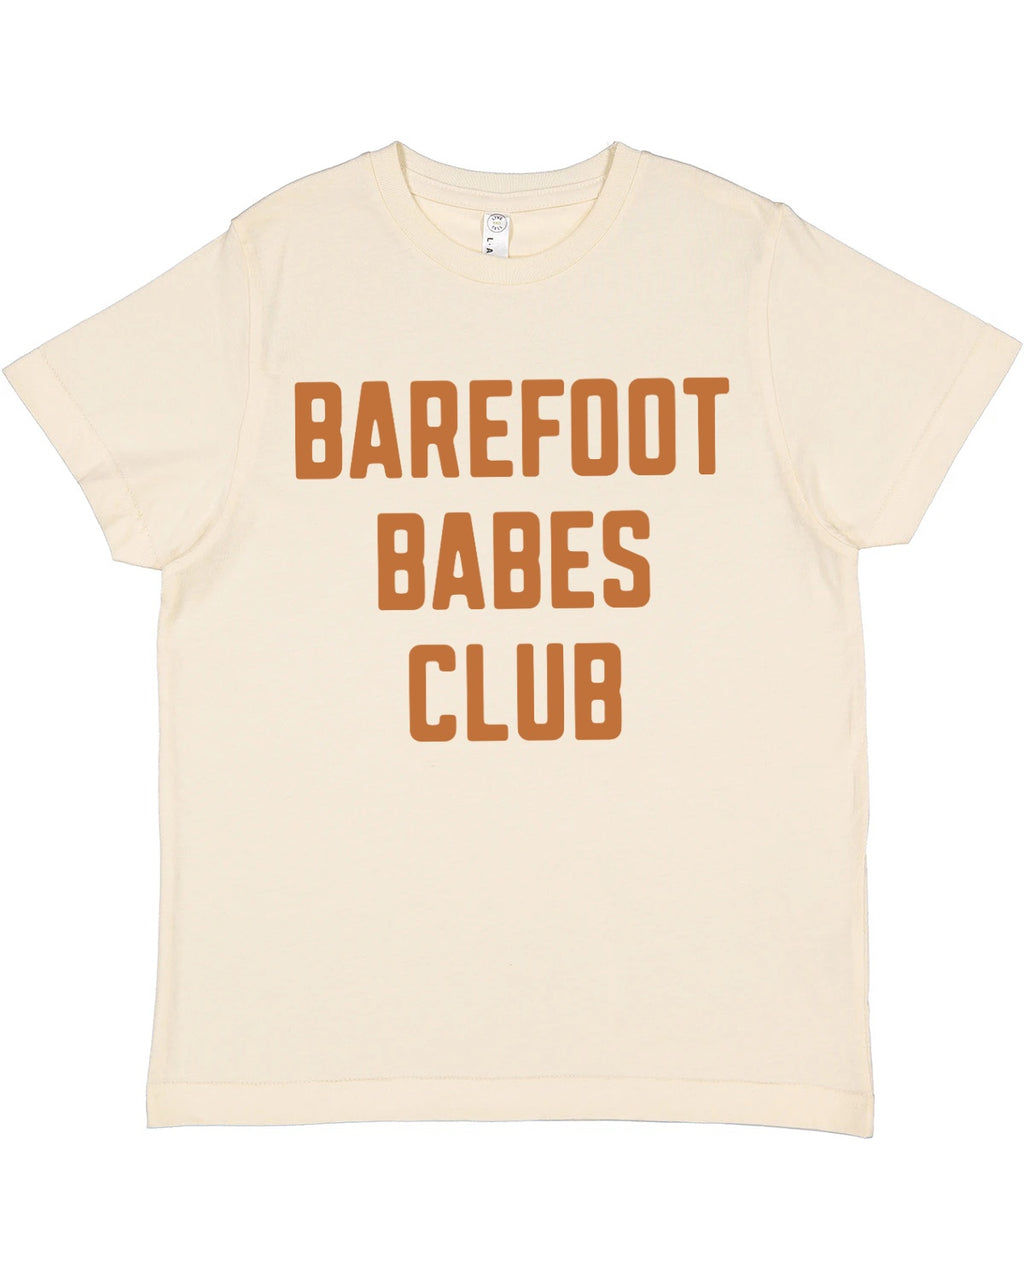 "Barefoot Babes Club" Tee